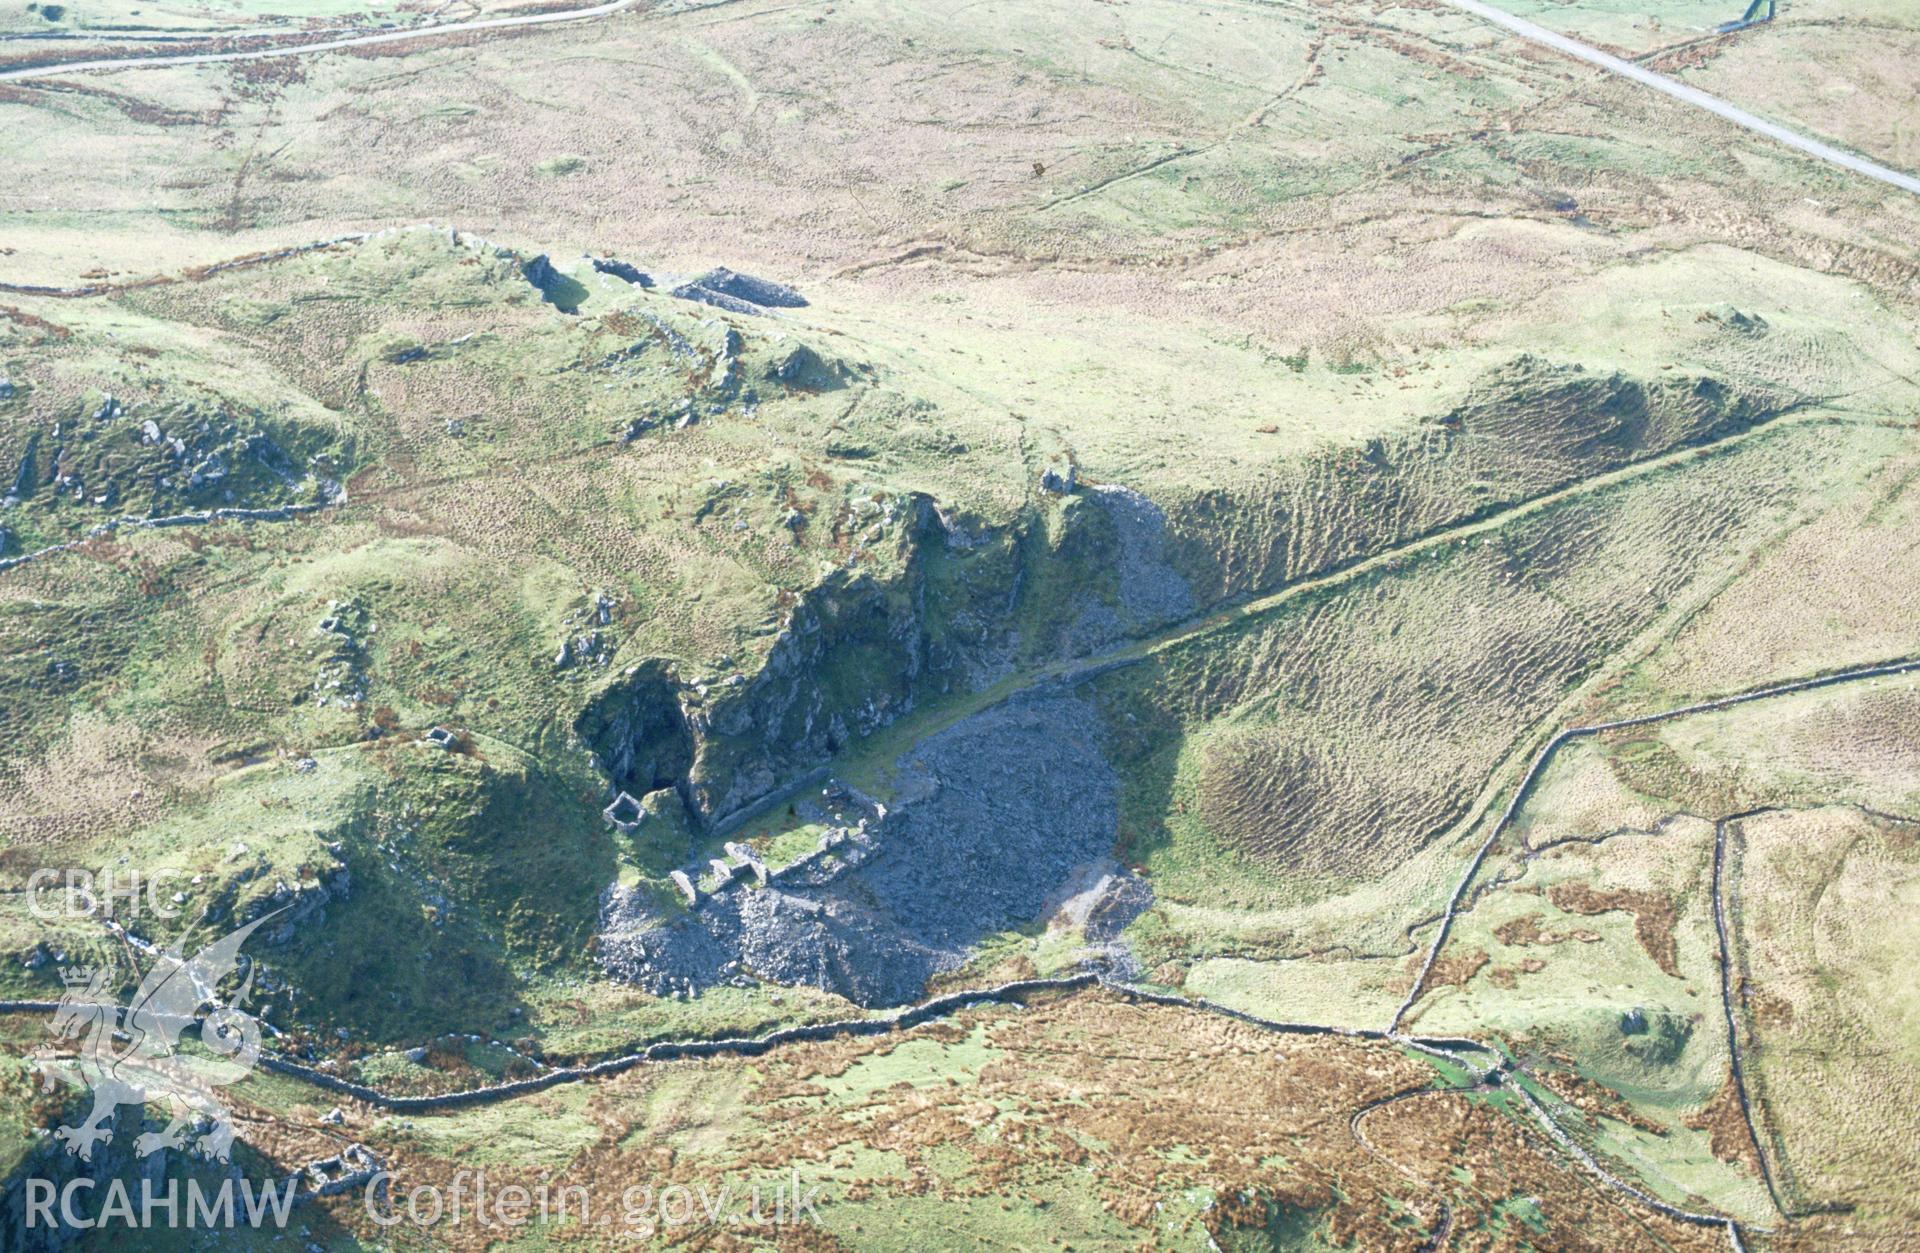 RCAHMW colour slide oblique aerial photograph of Bryn Glas Quarry, Ffestiniog, taken by C.R. Musson, 01/05/94